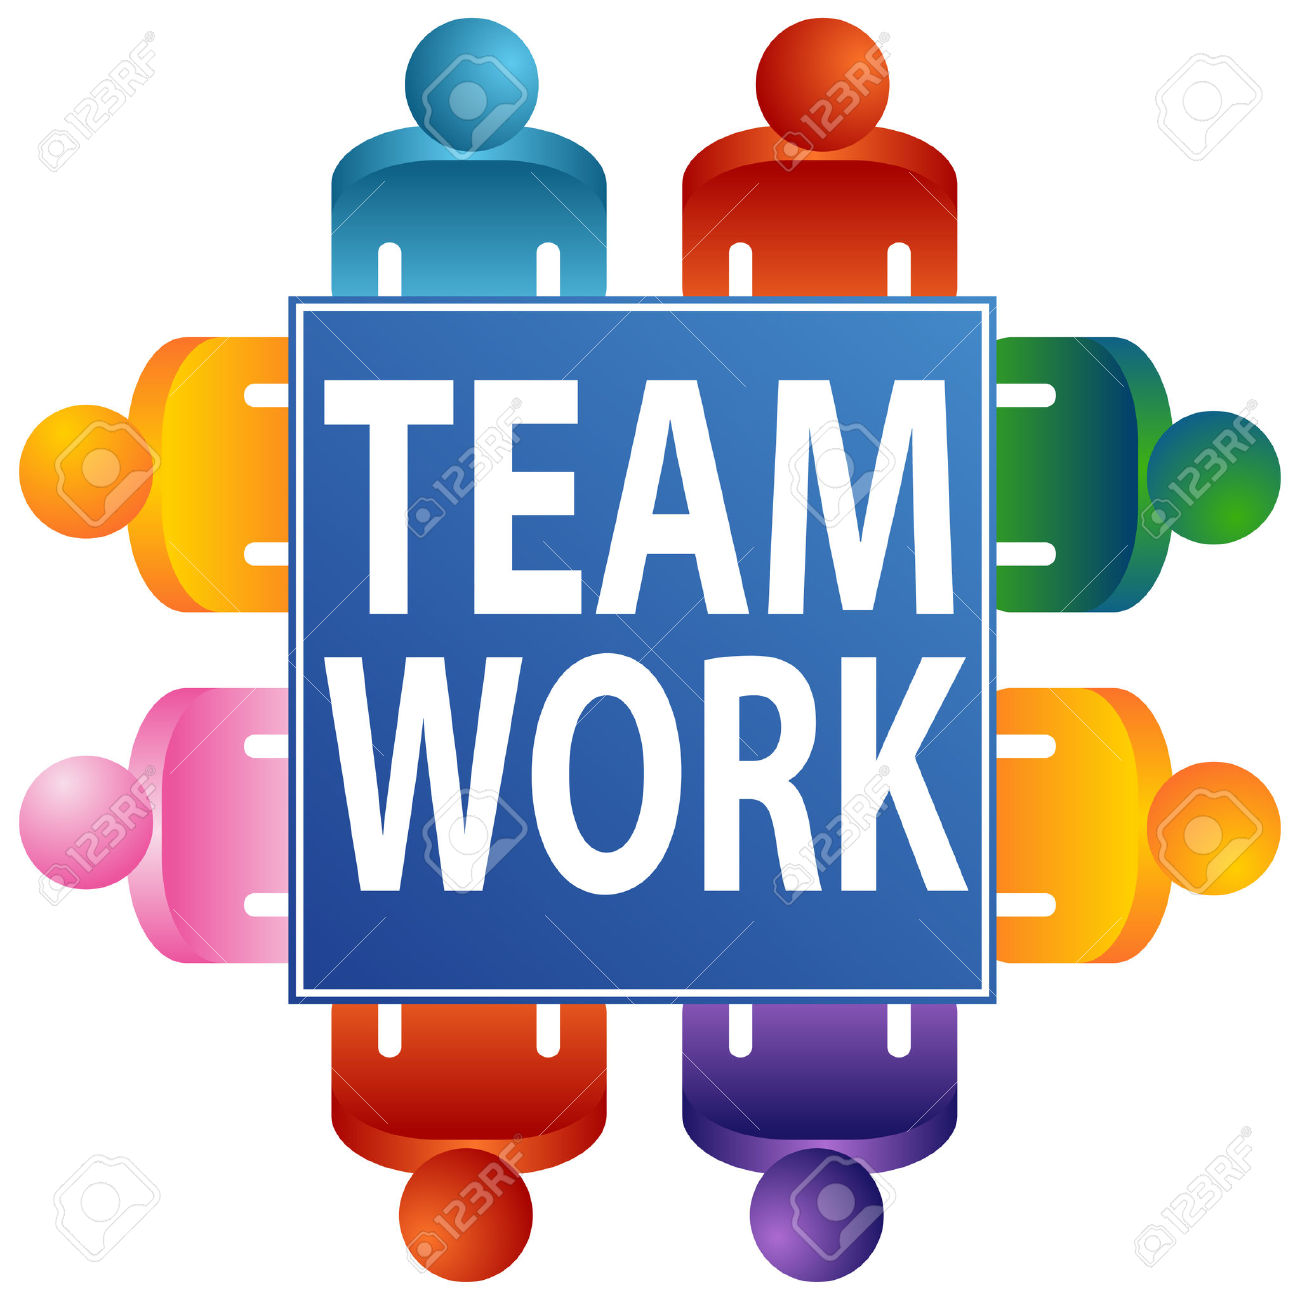 Teamwork images of team work 